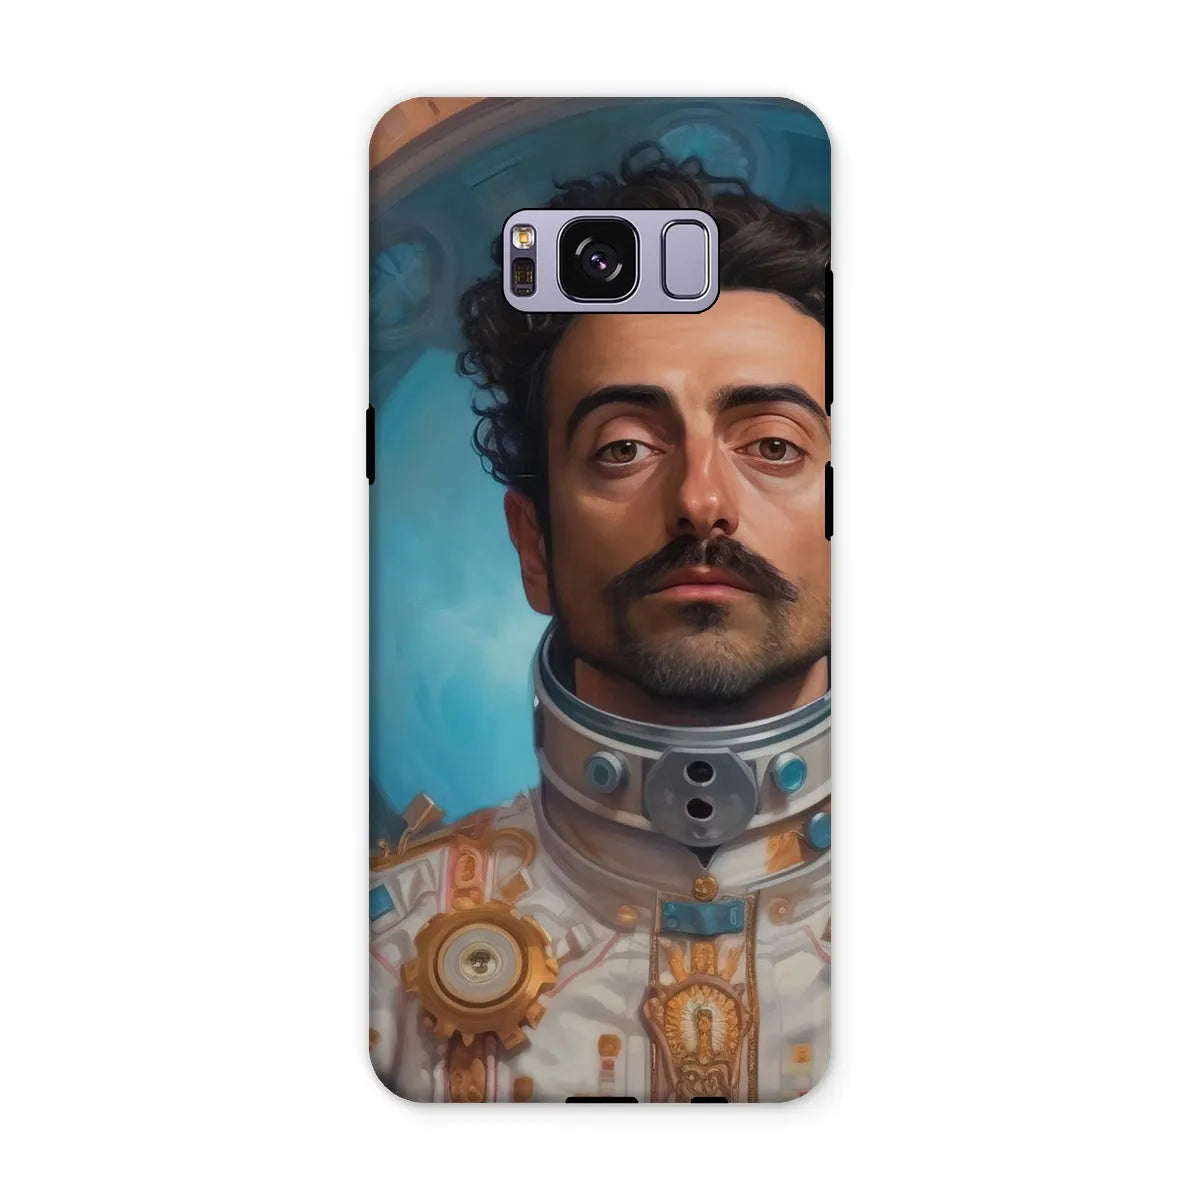 Eskandar The Gay Astronaut - Gay Aesthetic Art Phone Case - Samsung Galaxy S8 Plus / Matte - Mobile Phone Cases